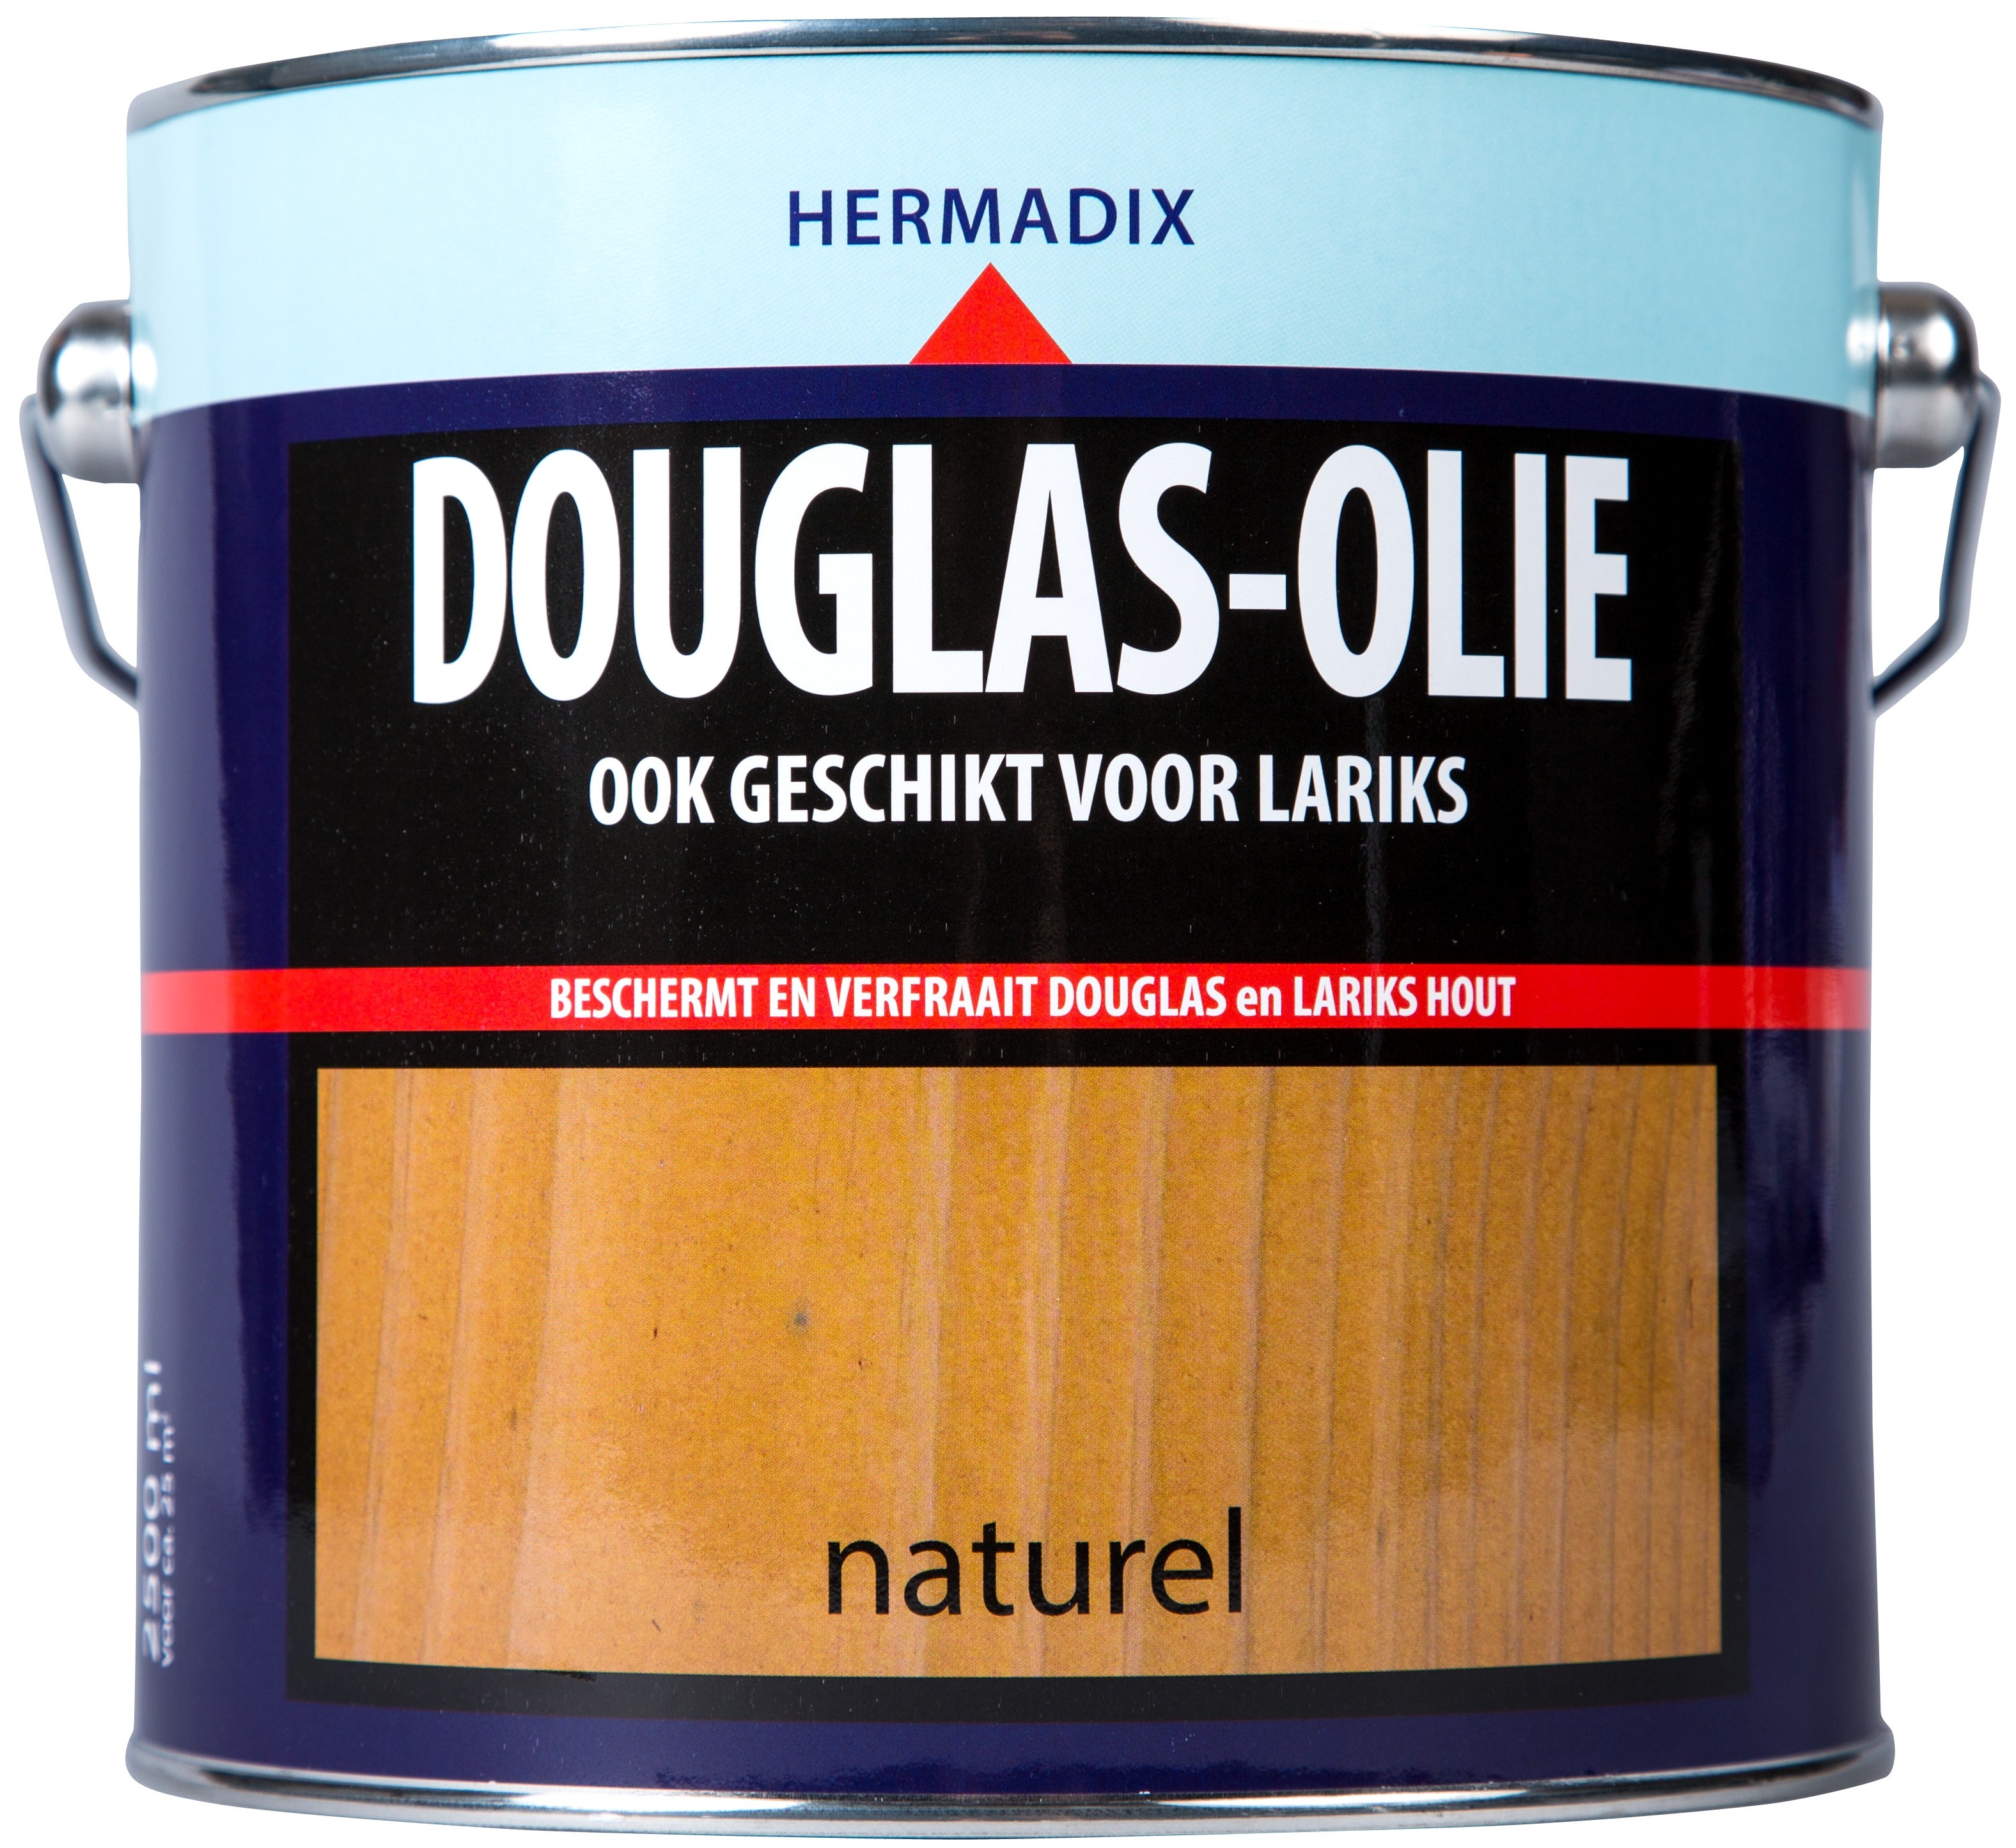 Hermadix Douglas olie naturel 2,5L